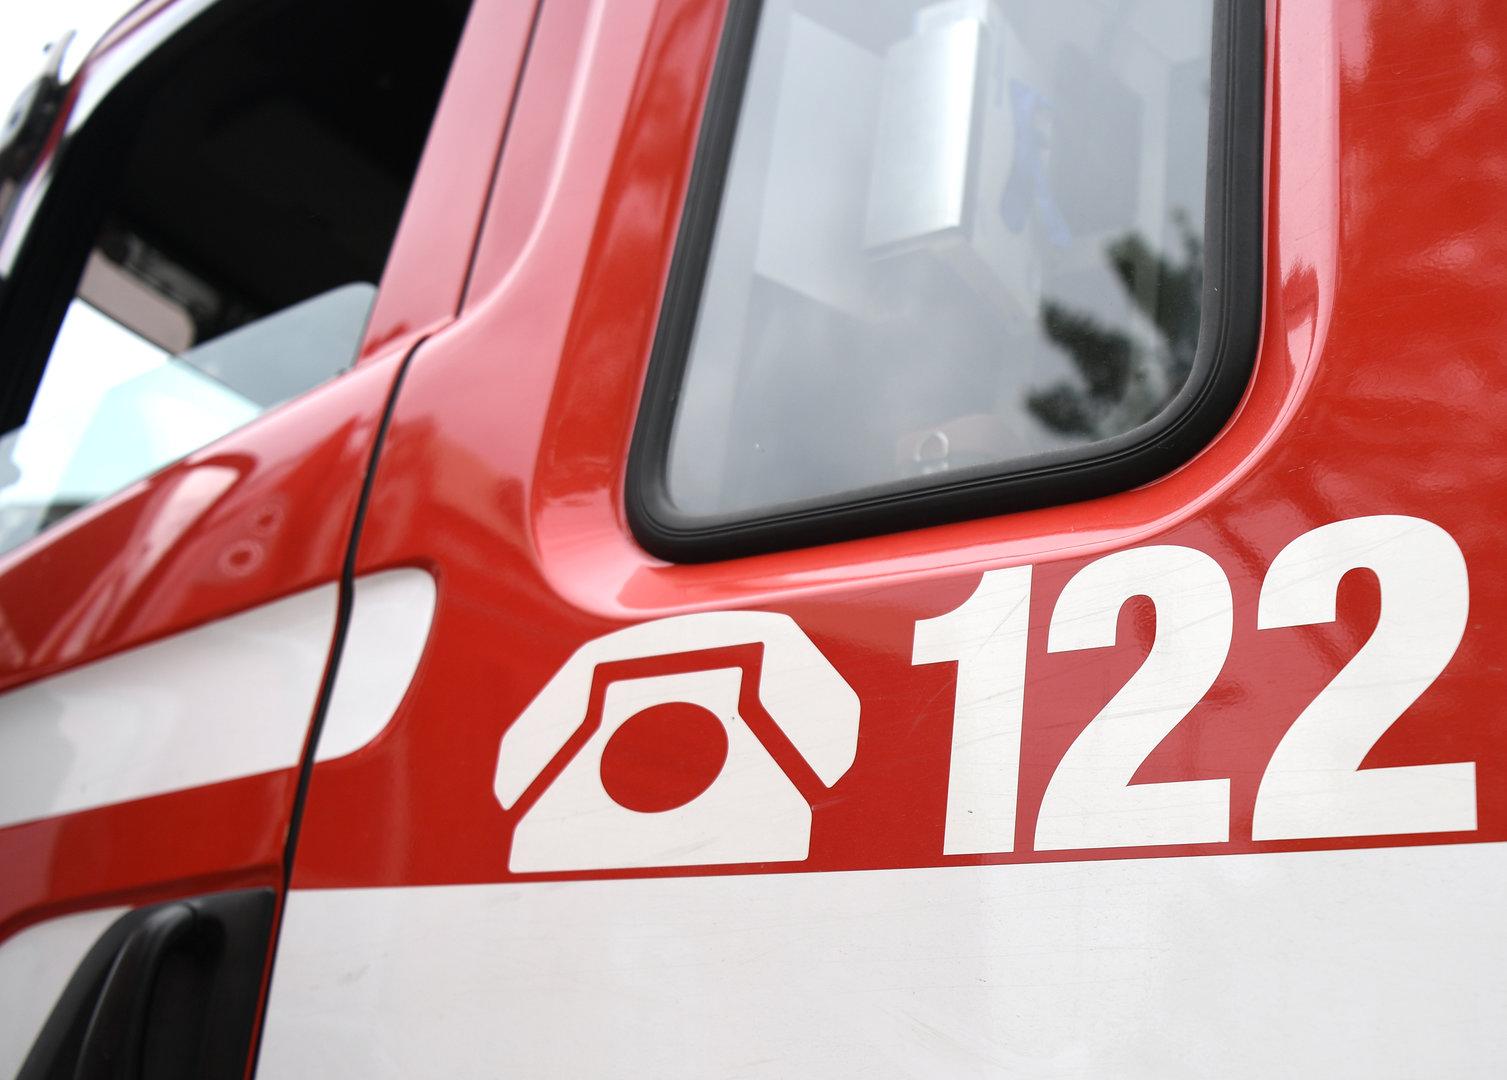 Wien: Tote Frau bei Zimmerbrand entdeckt